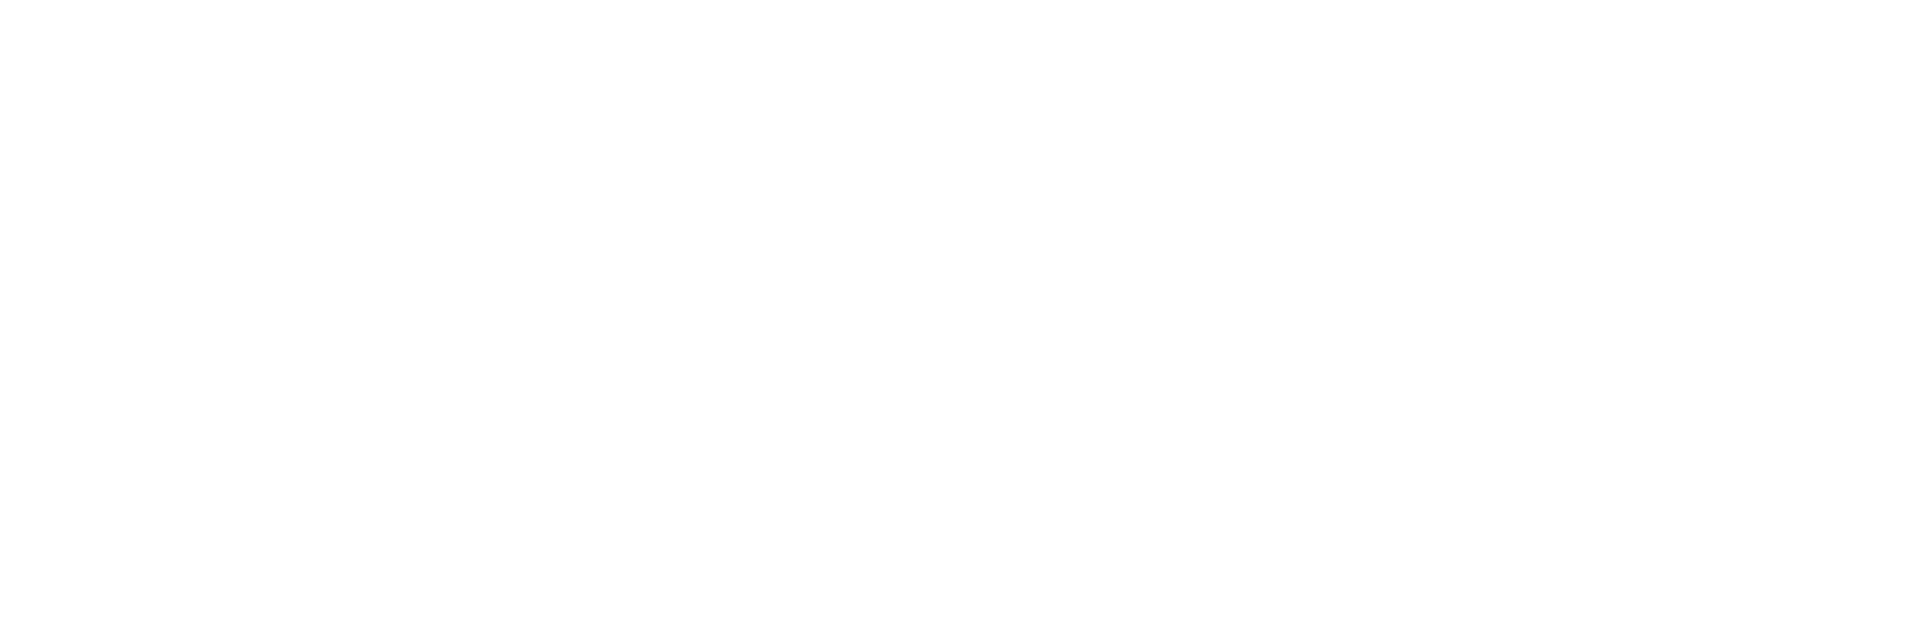 Madison Liberty Institute